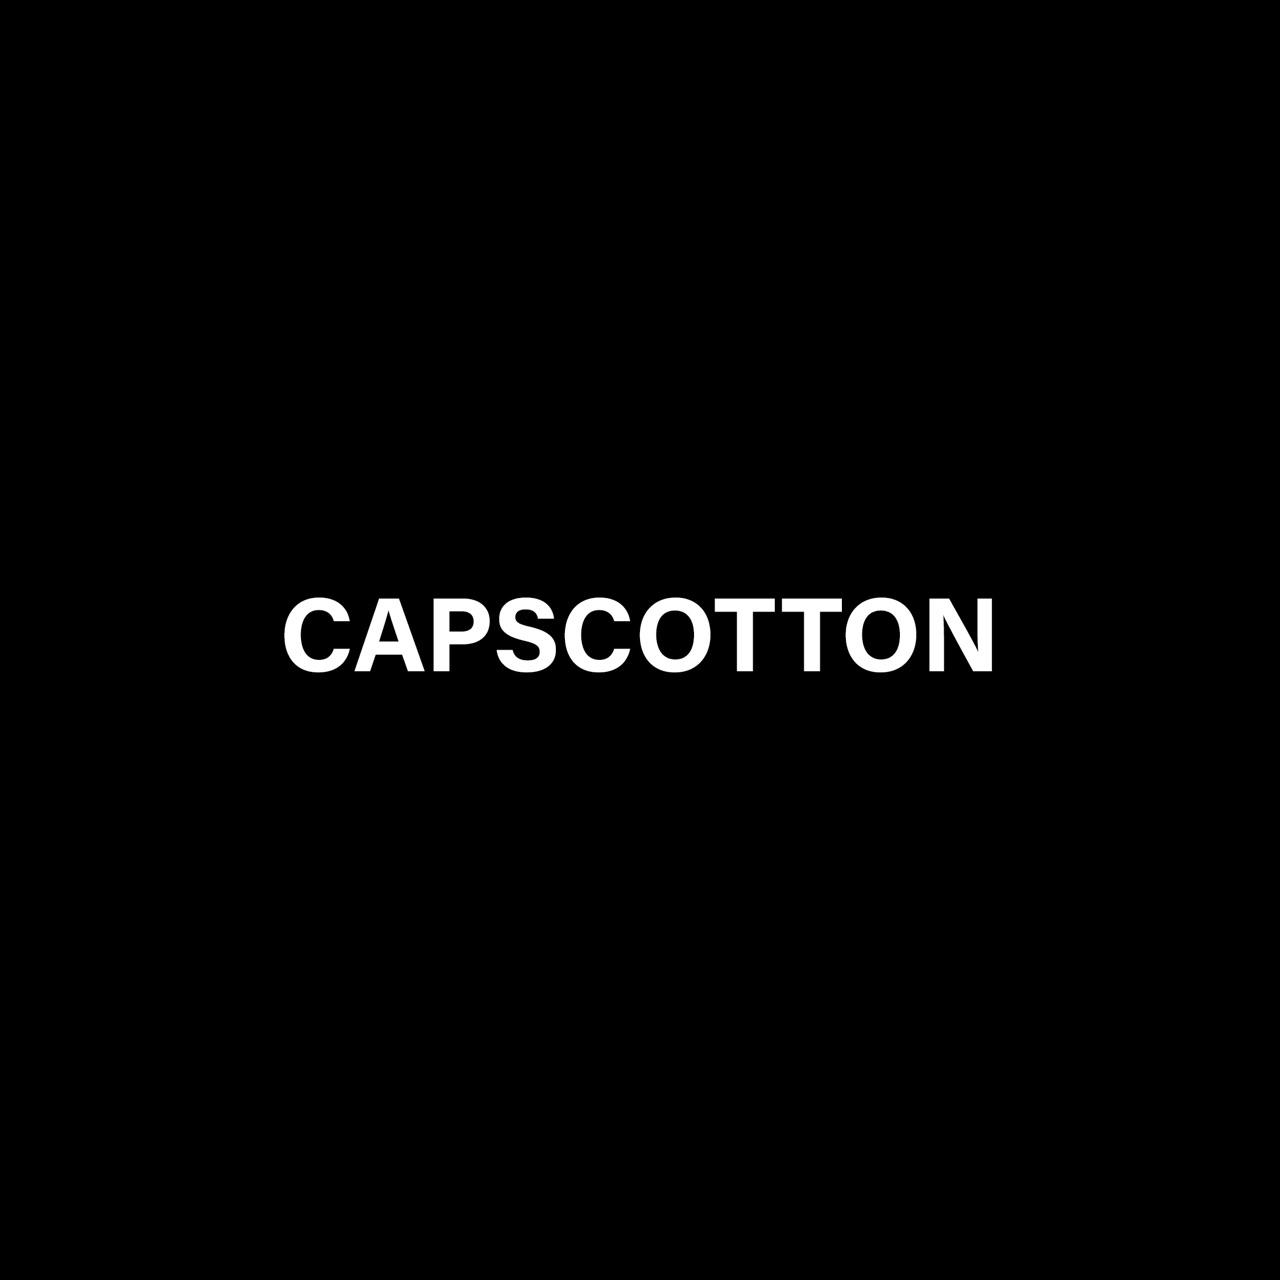 Capscotton